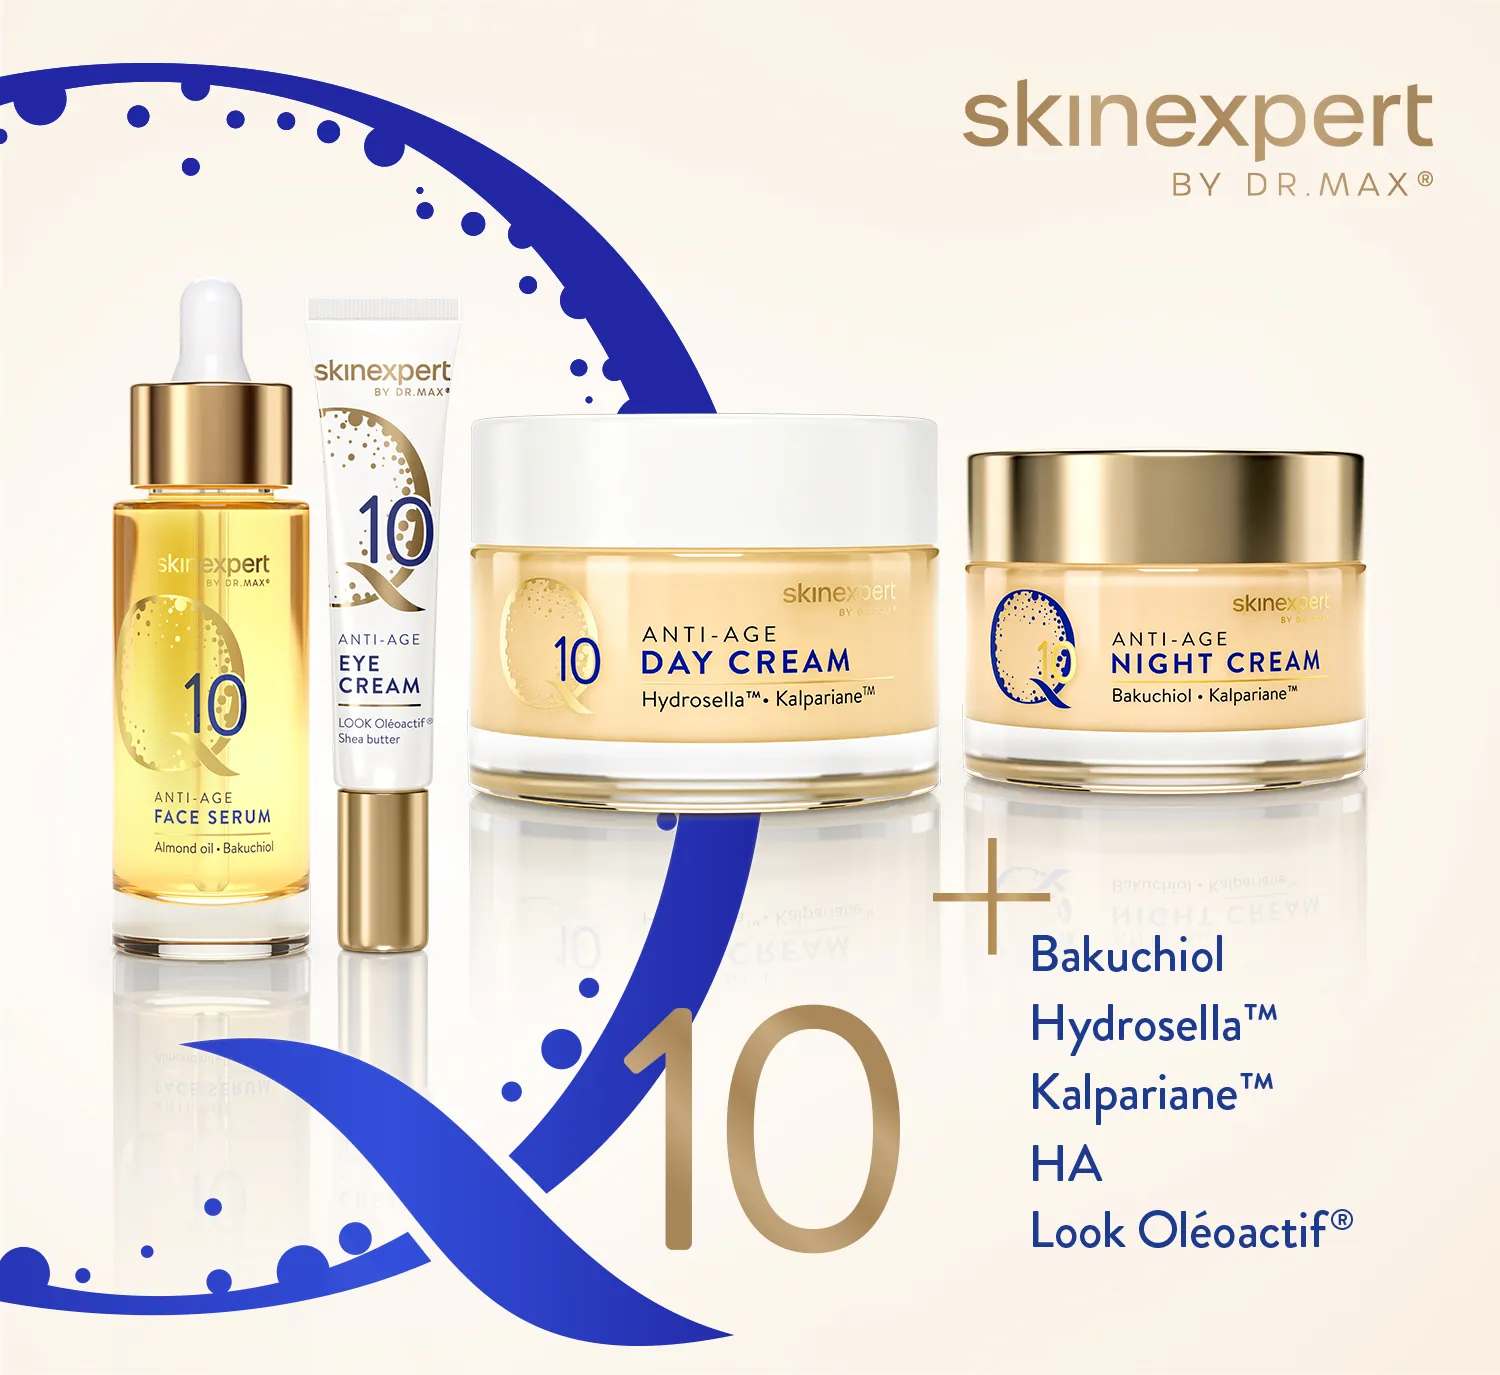 Skinexpert by Dr. Max Q10. Koenzym Q 10, akuchiol, Hydrosella TM, Kalpariane TM, + LOOK Oléoactif®